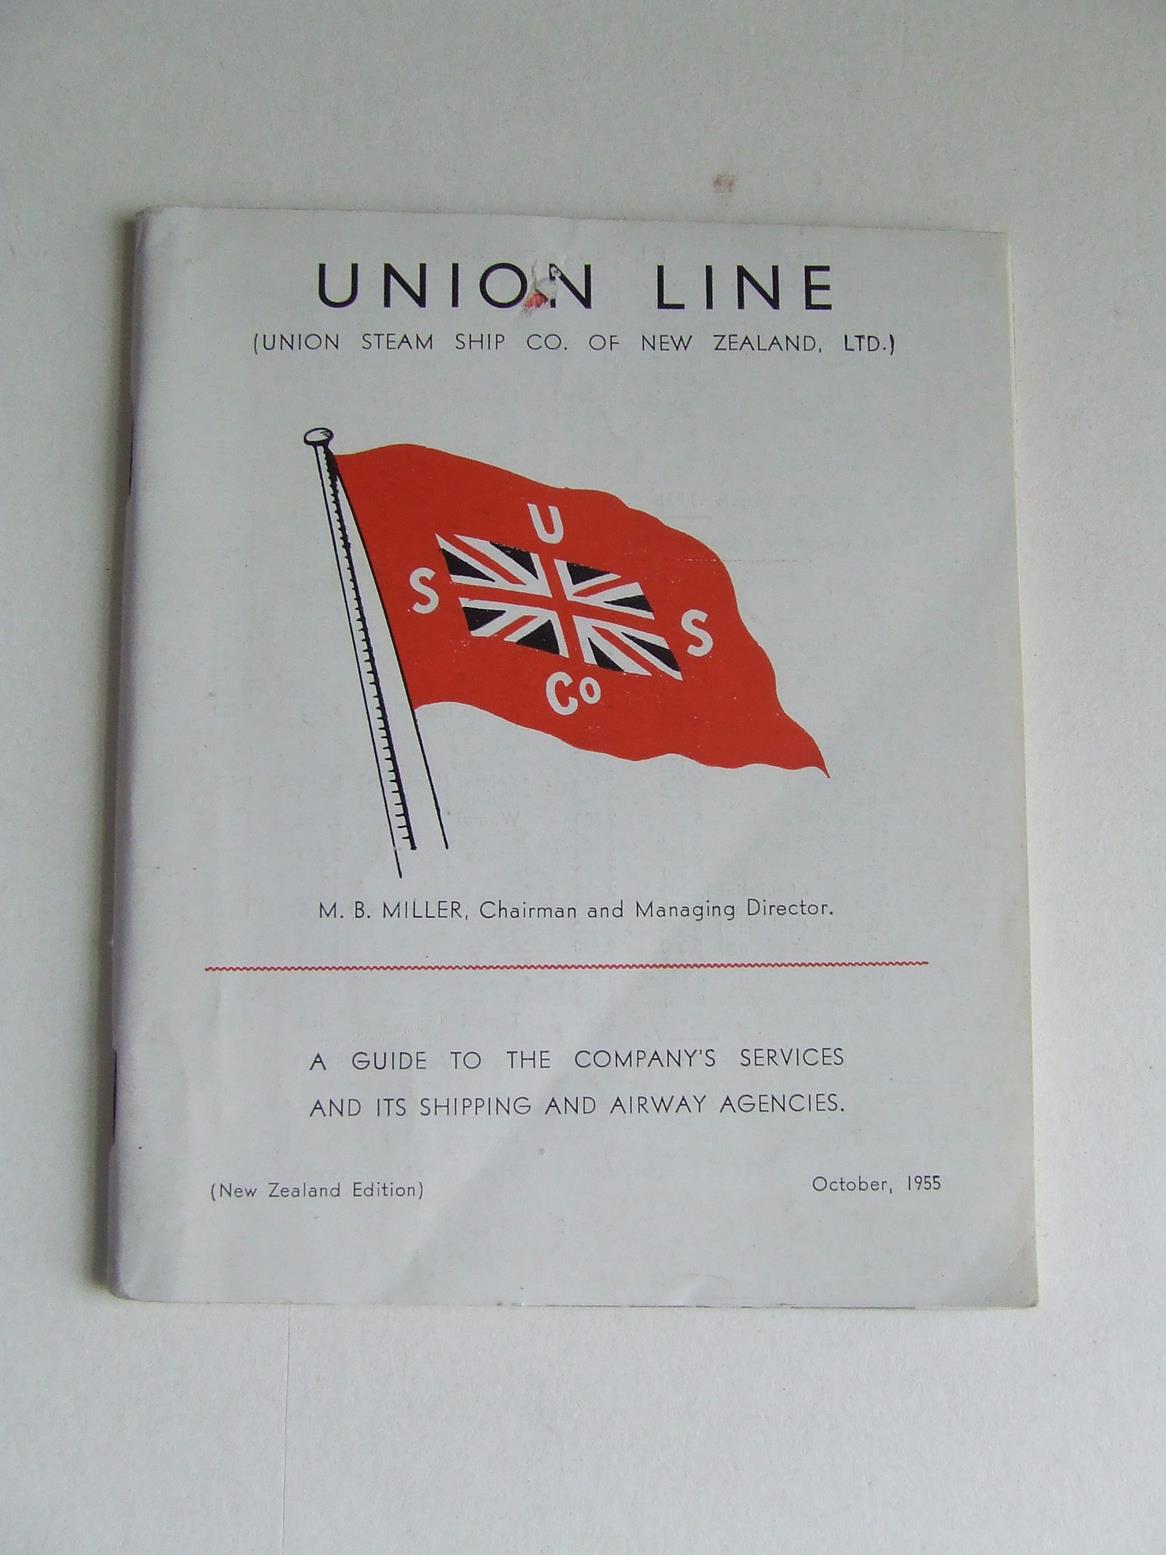 Union Line (Union Steam Ship Co. of New Zealand Ltd.)